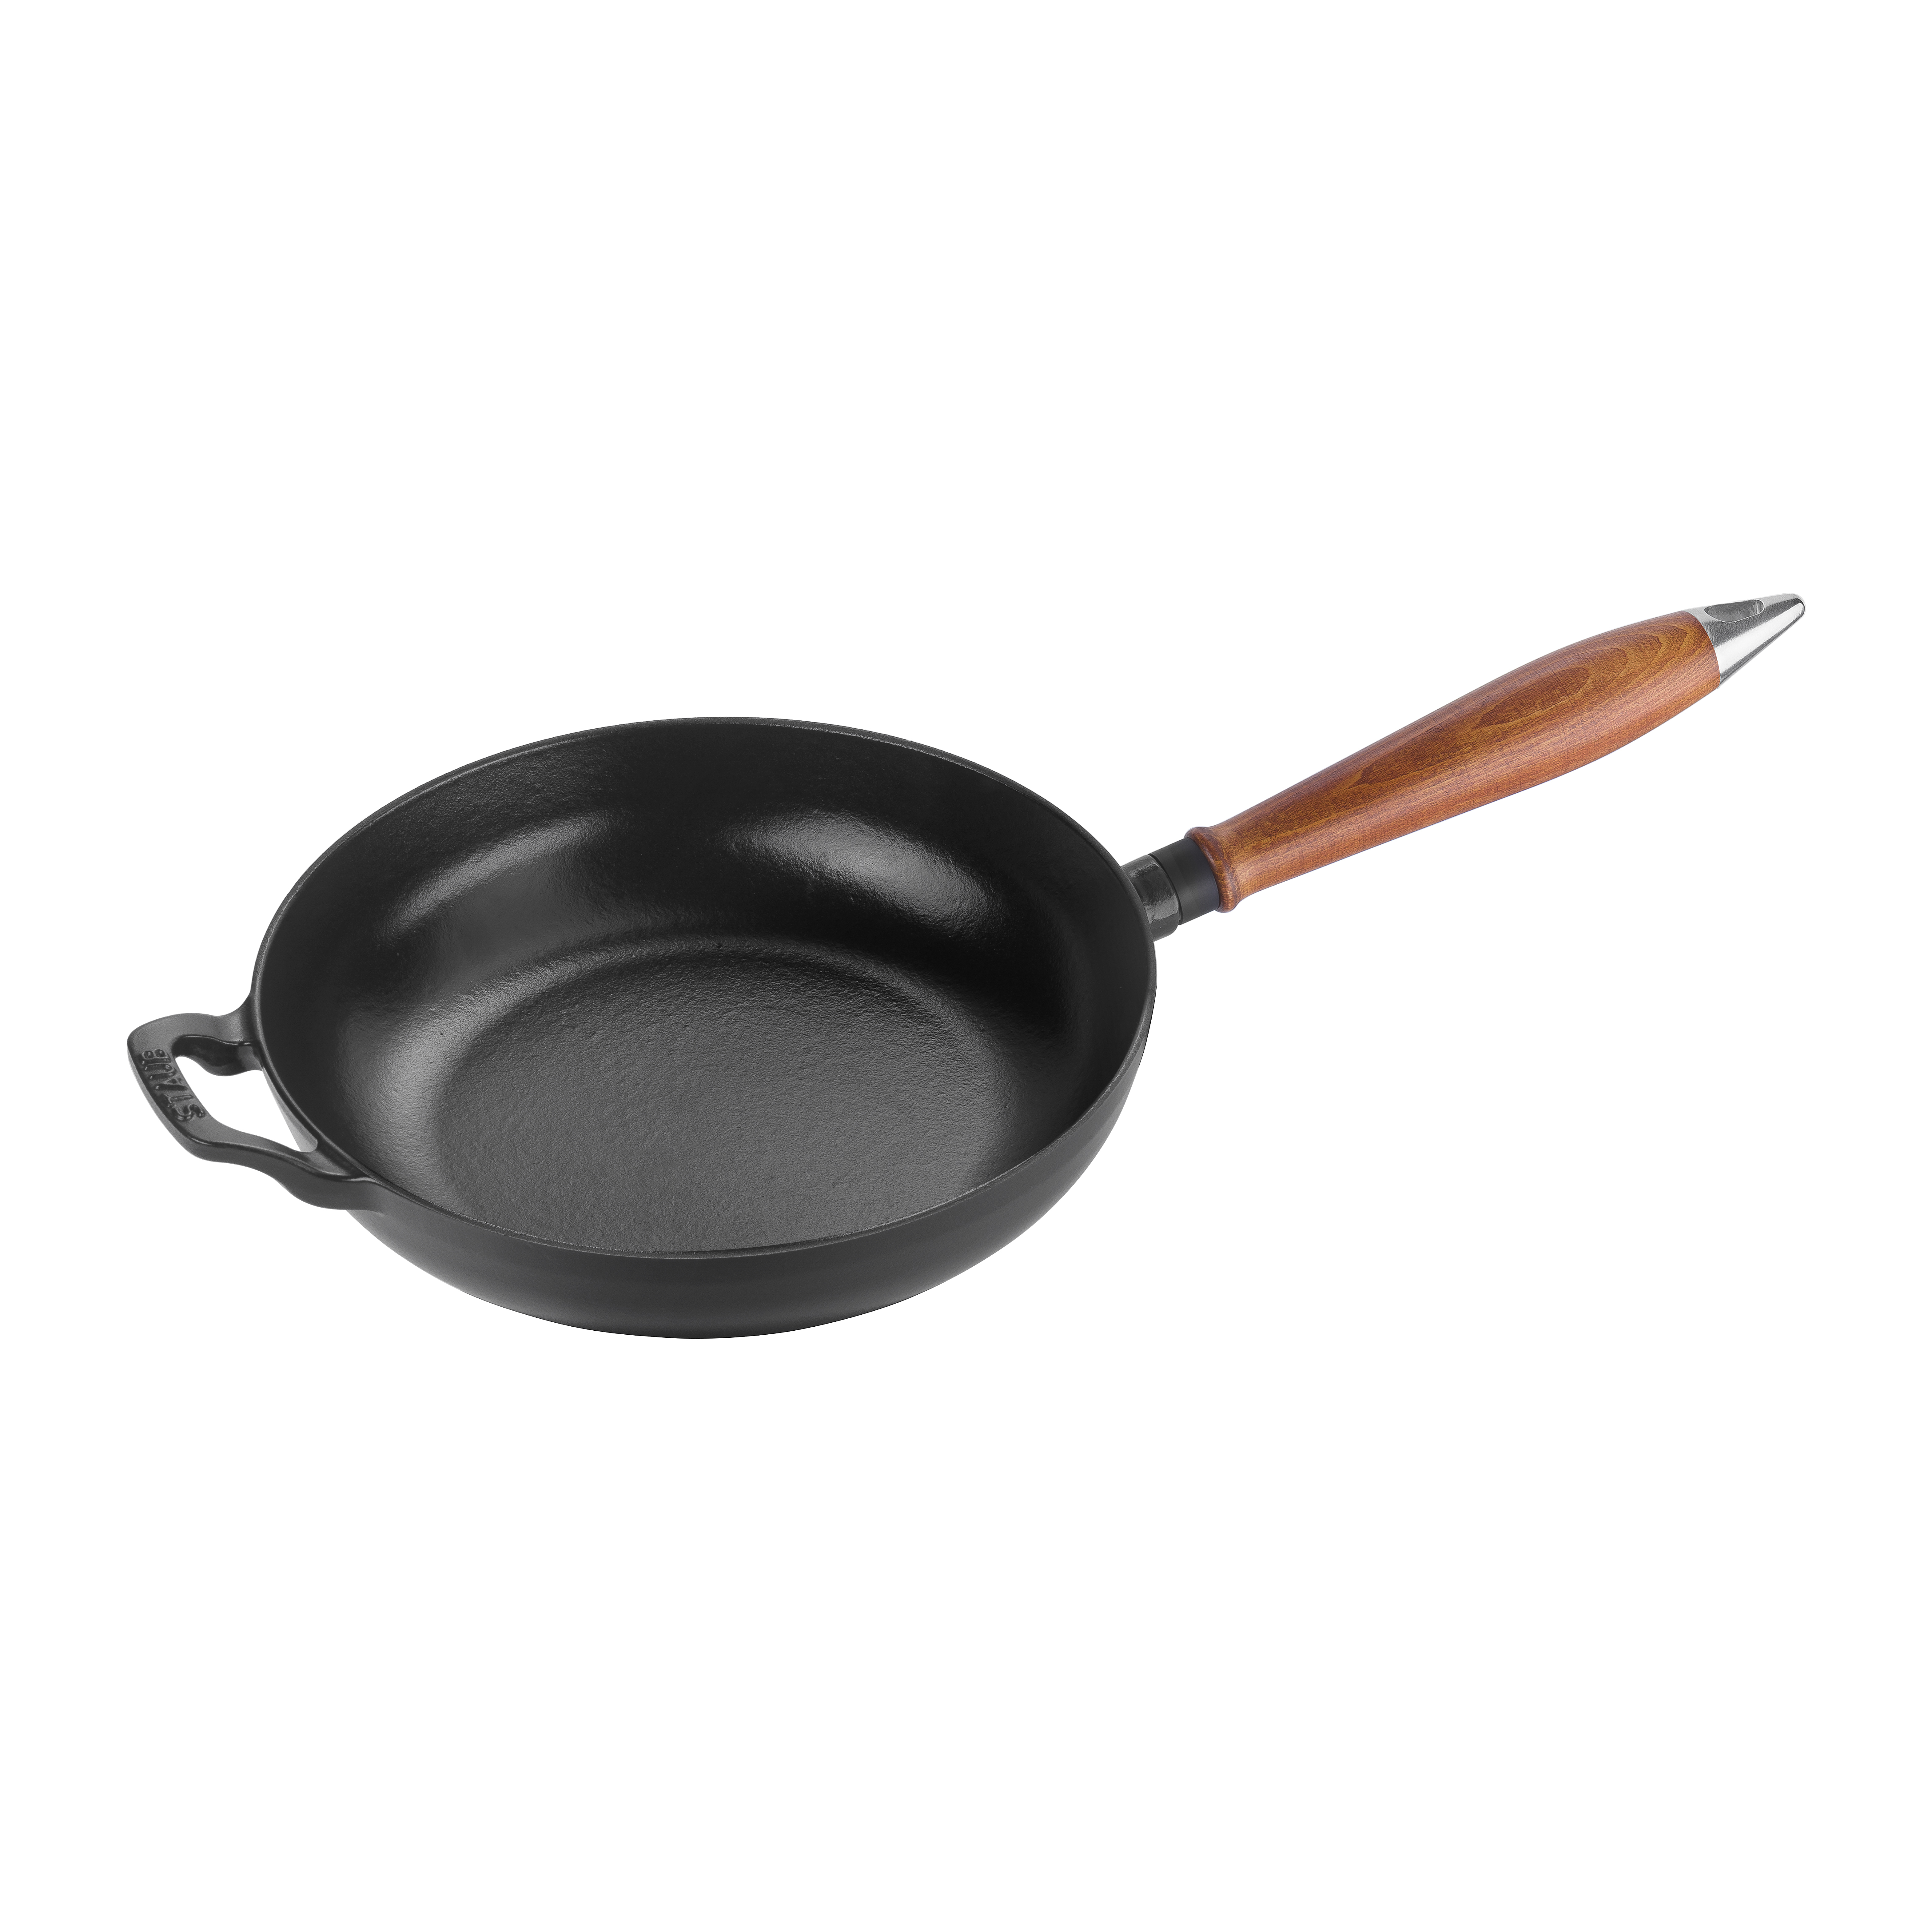 https://www.nordicnest.com/assets/blobs/staub-vintage-frying-pan-with-wooden-handle-24-cm-black/502885-01_1_ProductImageMain-da84187910.jpg